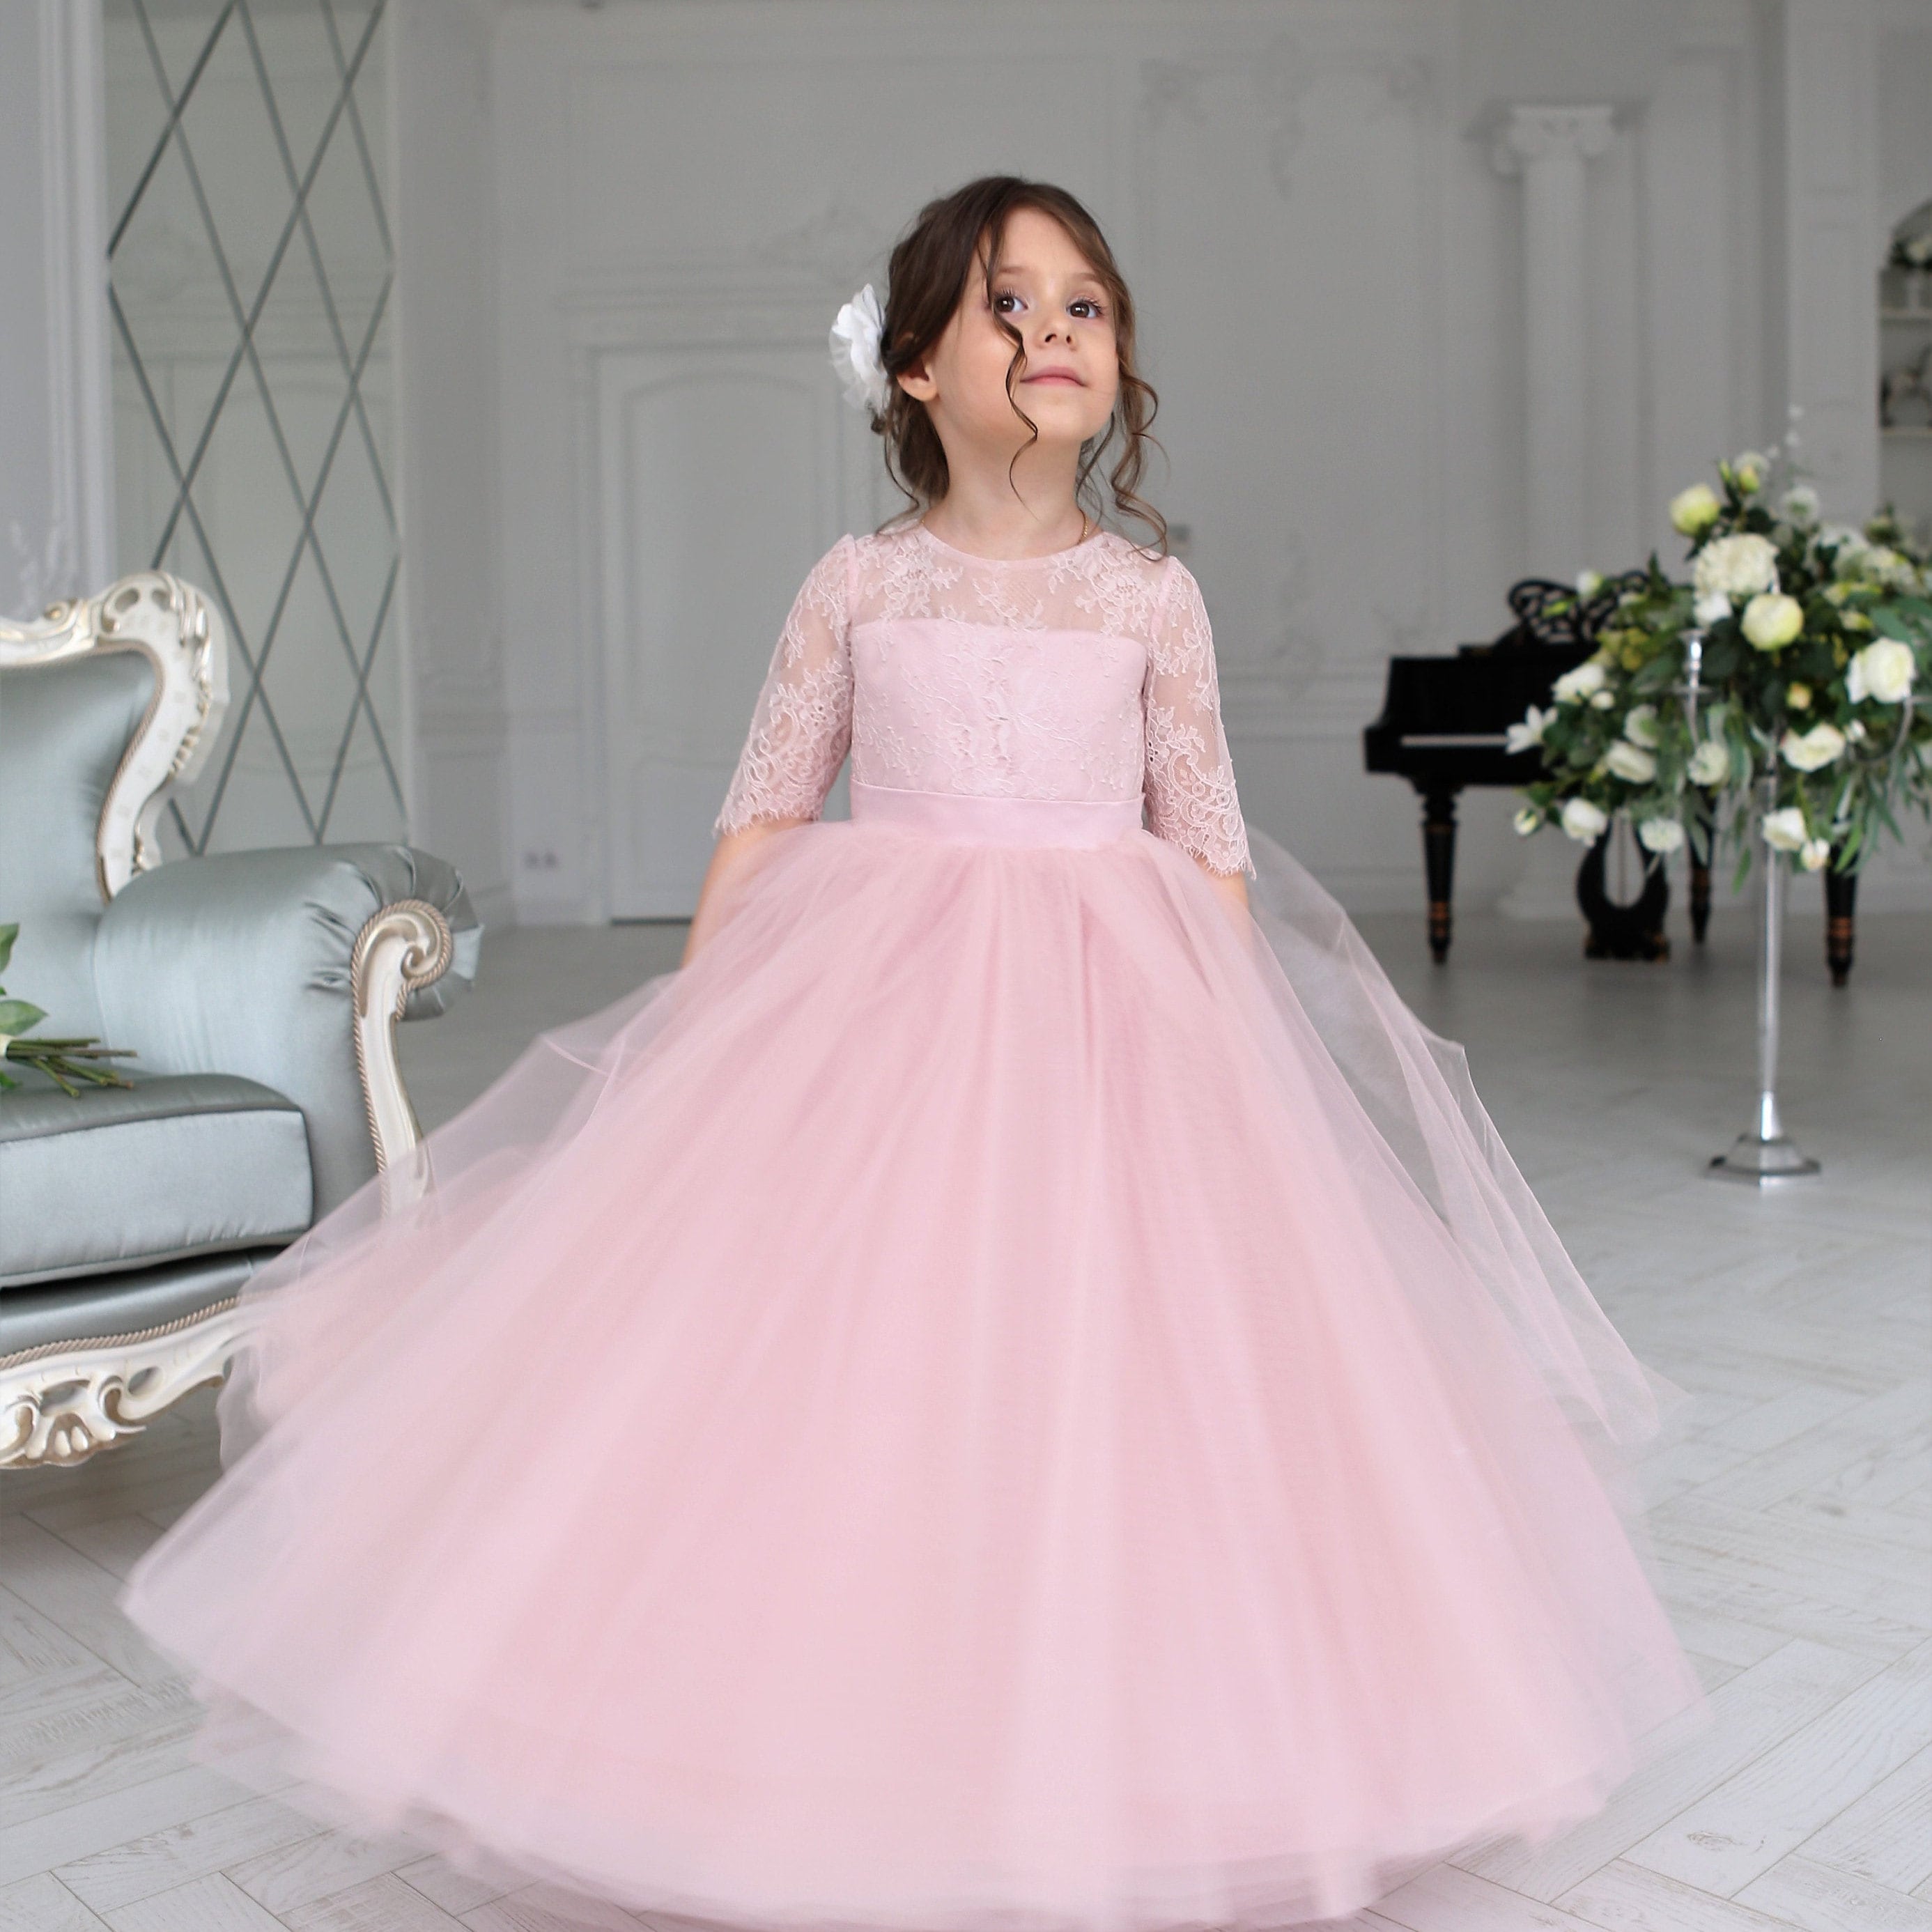 Blush pink tulle flower girl dress wedding baby dress tutu | Etsy